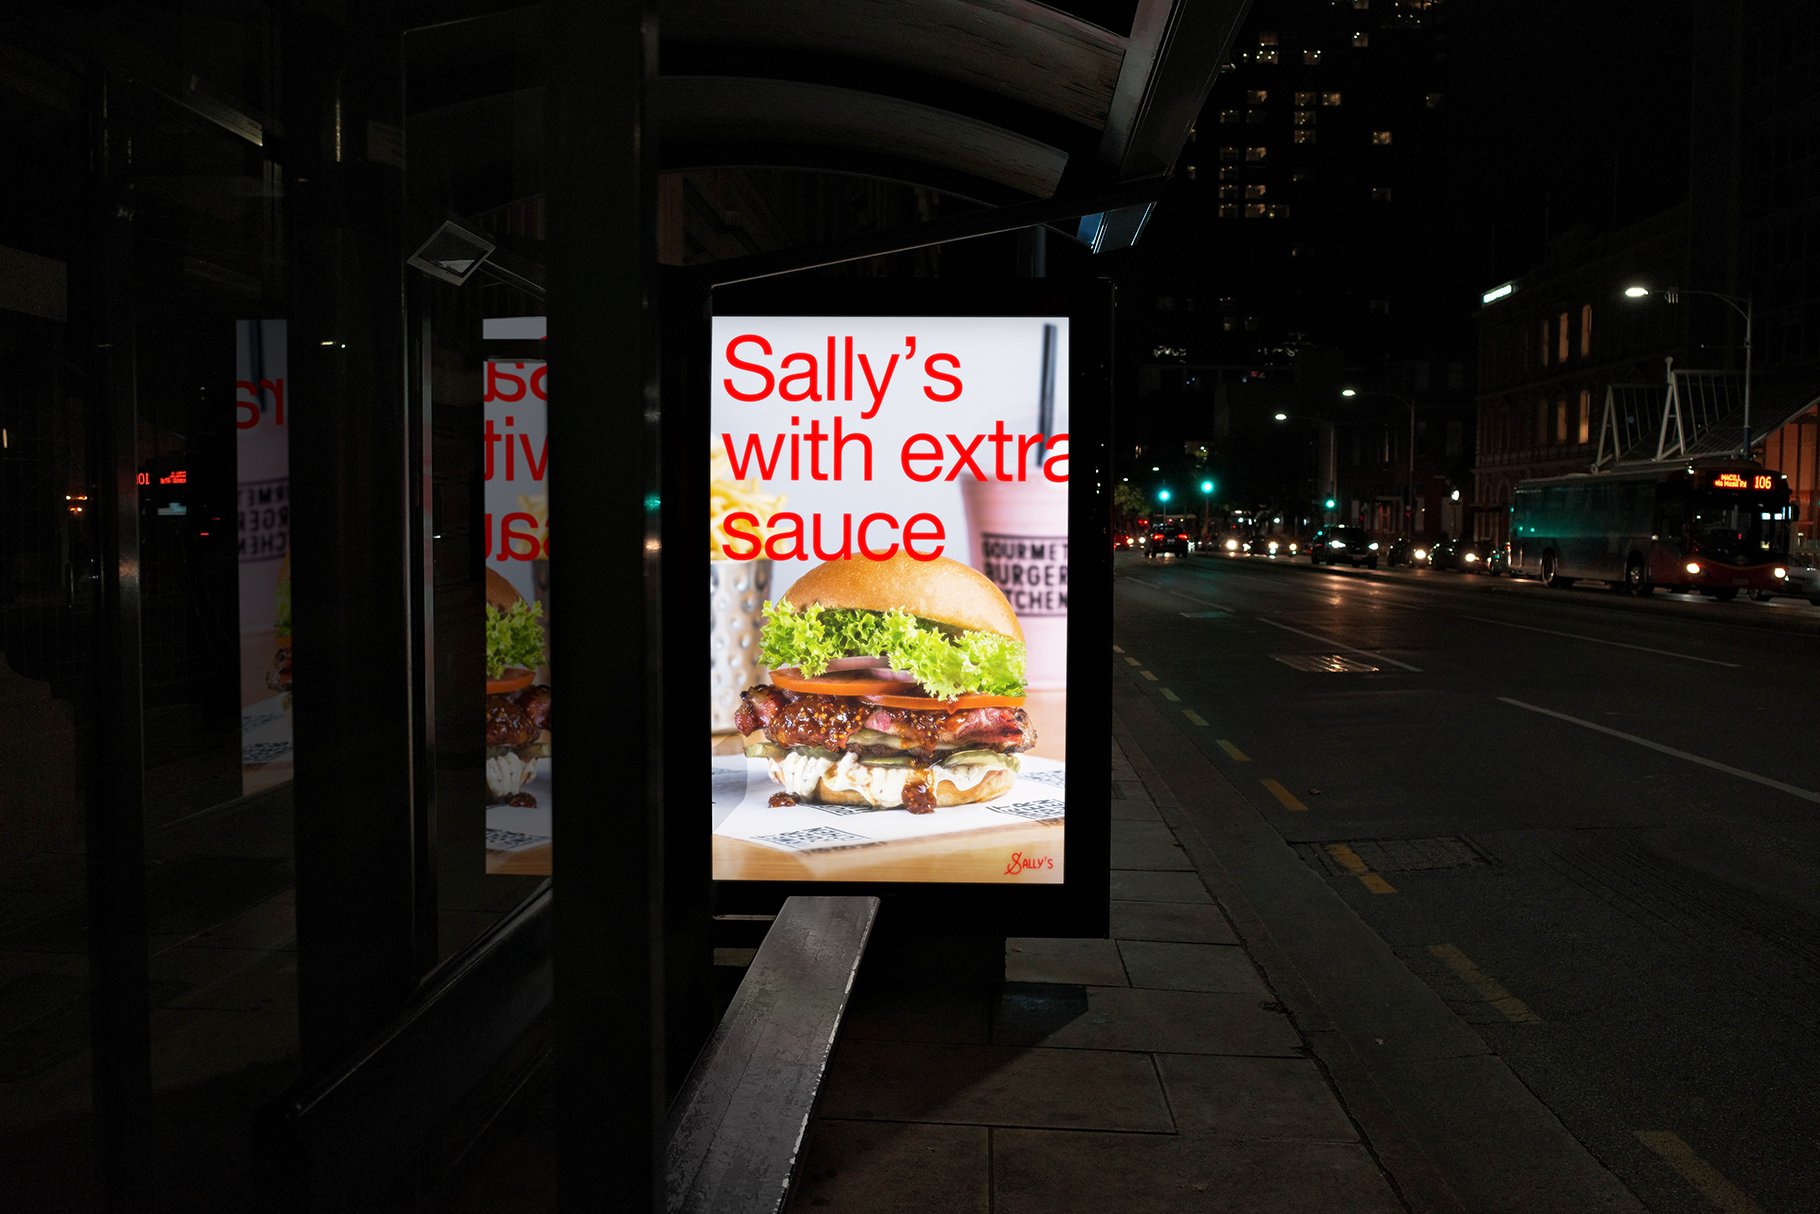 Night Bus Station Billboard Mockup cover image.